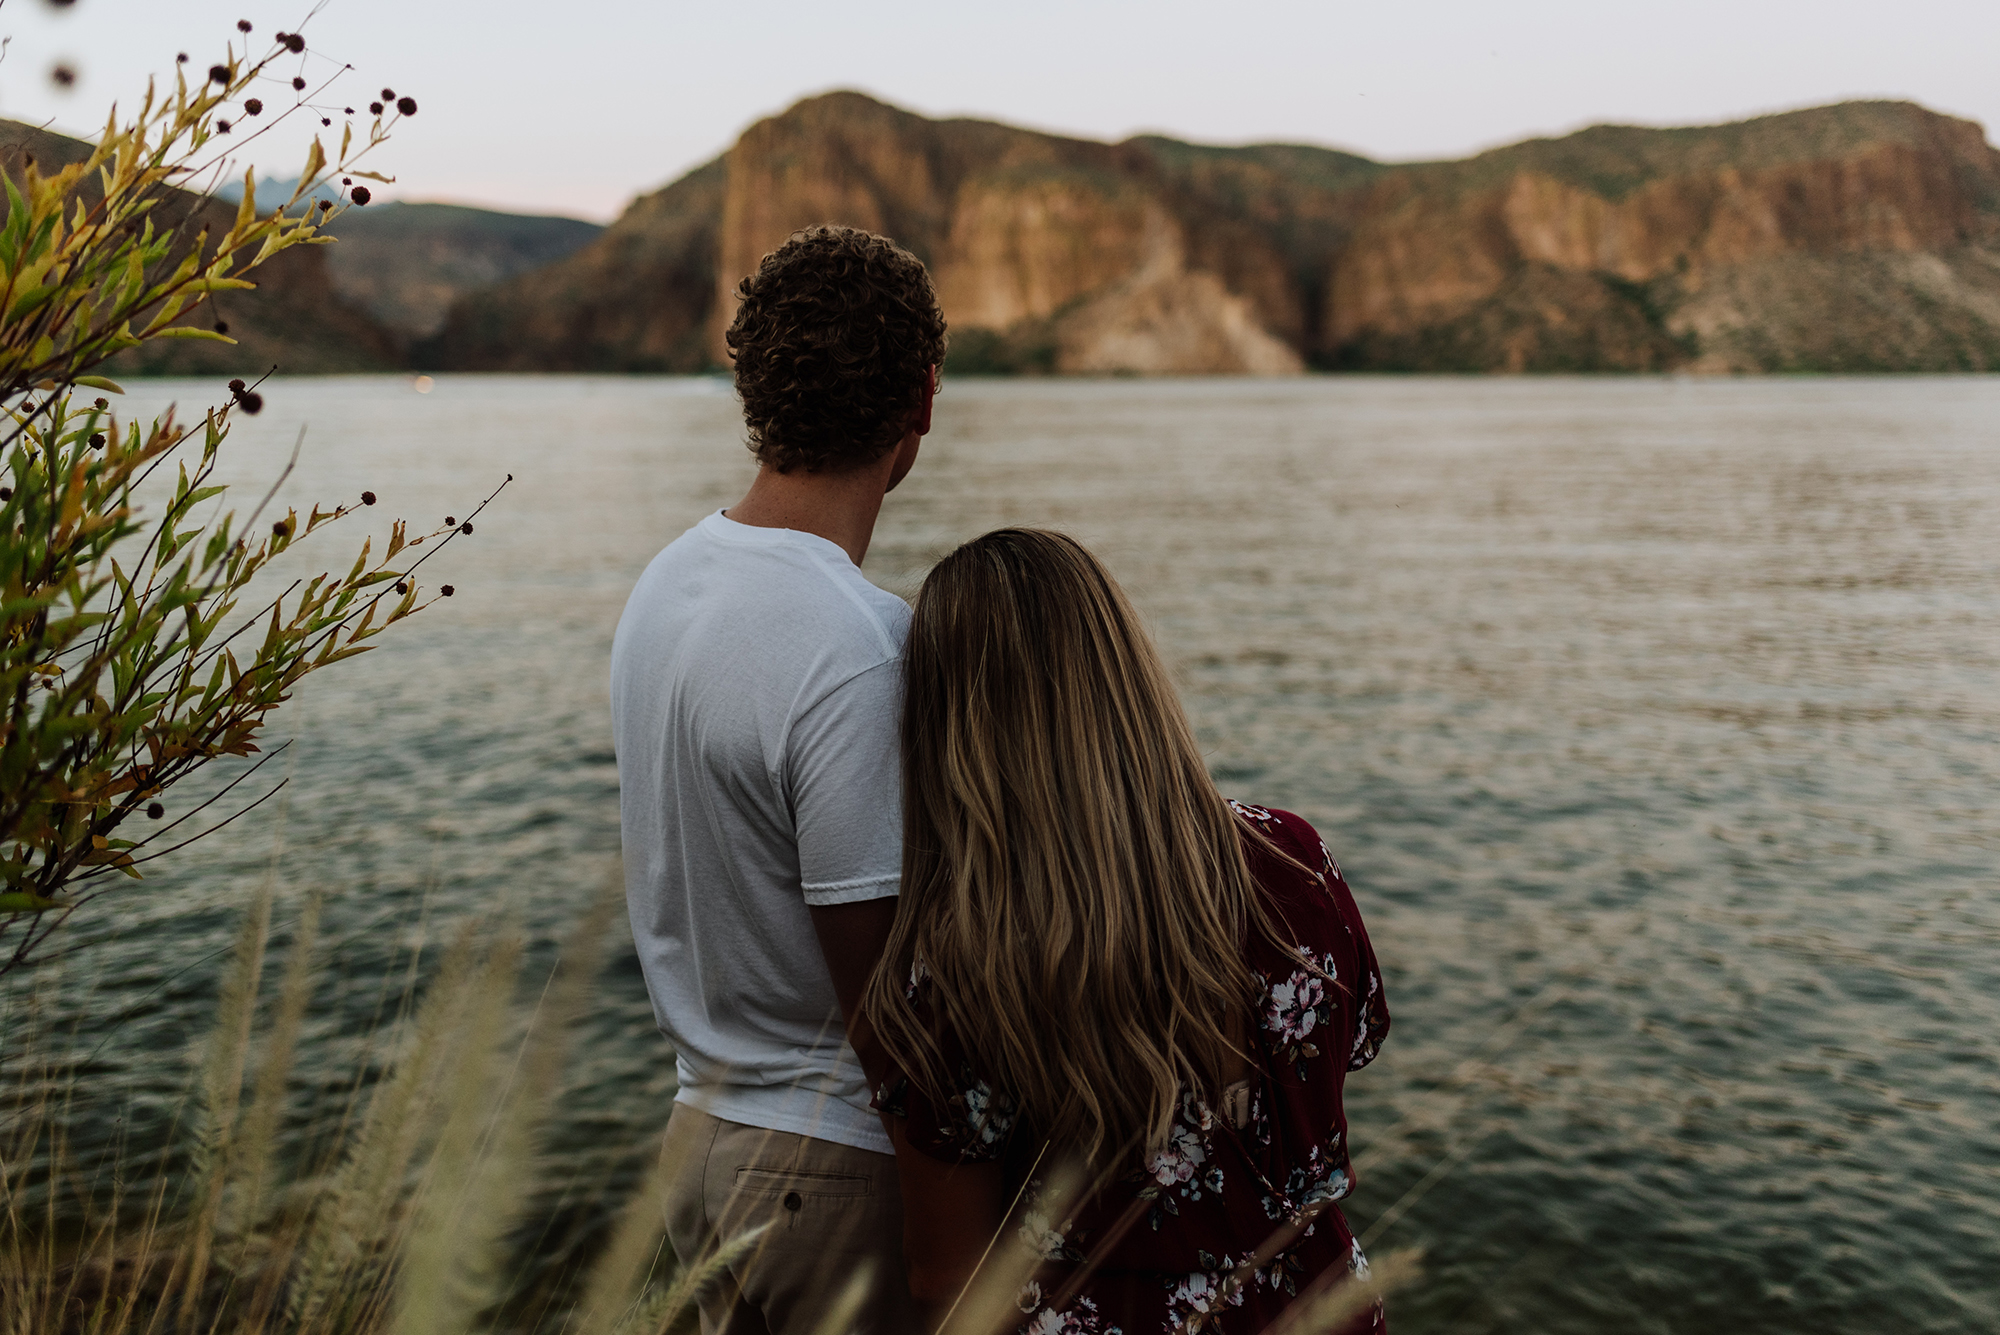 Engagement photo inspiration at Canyon Lake in Arizona.